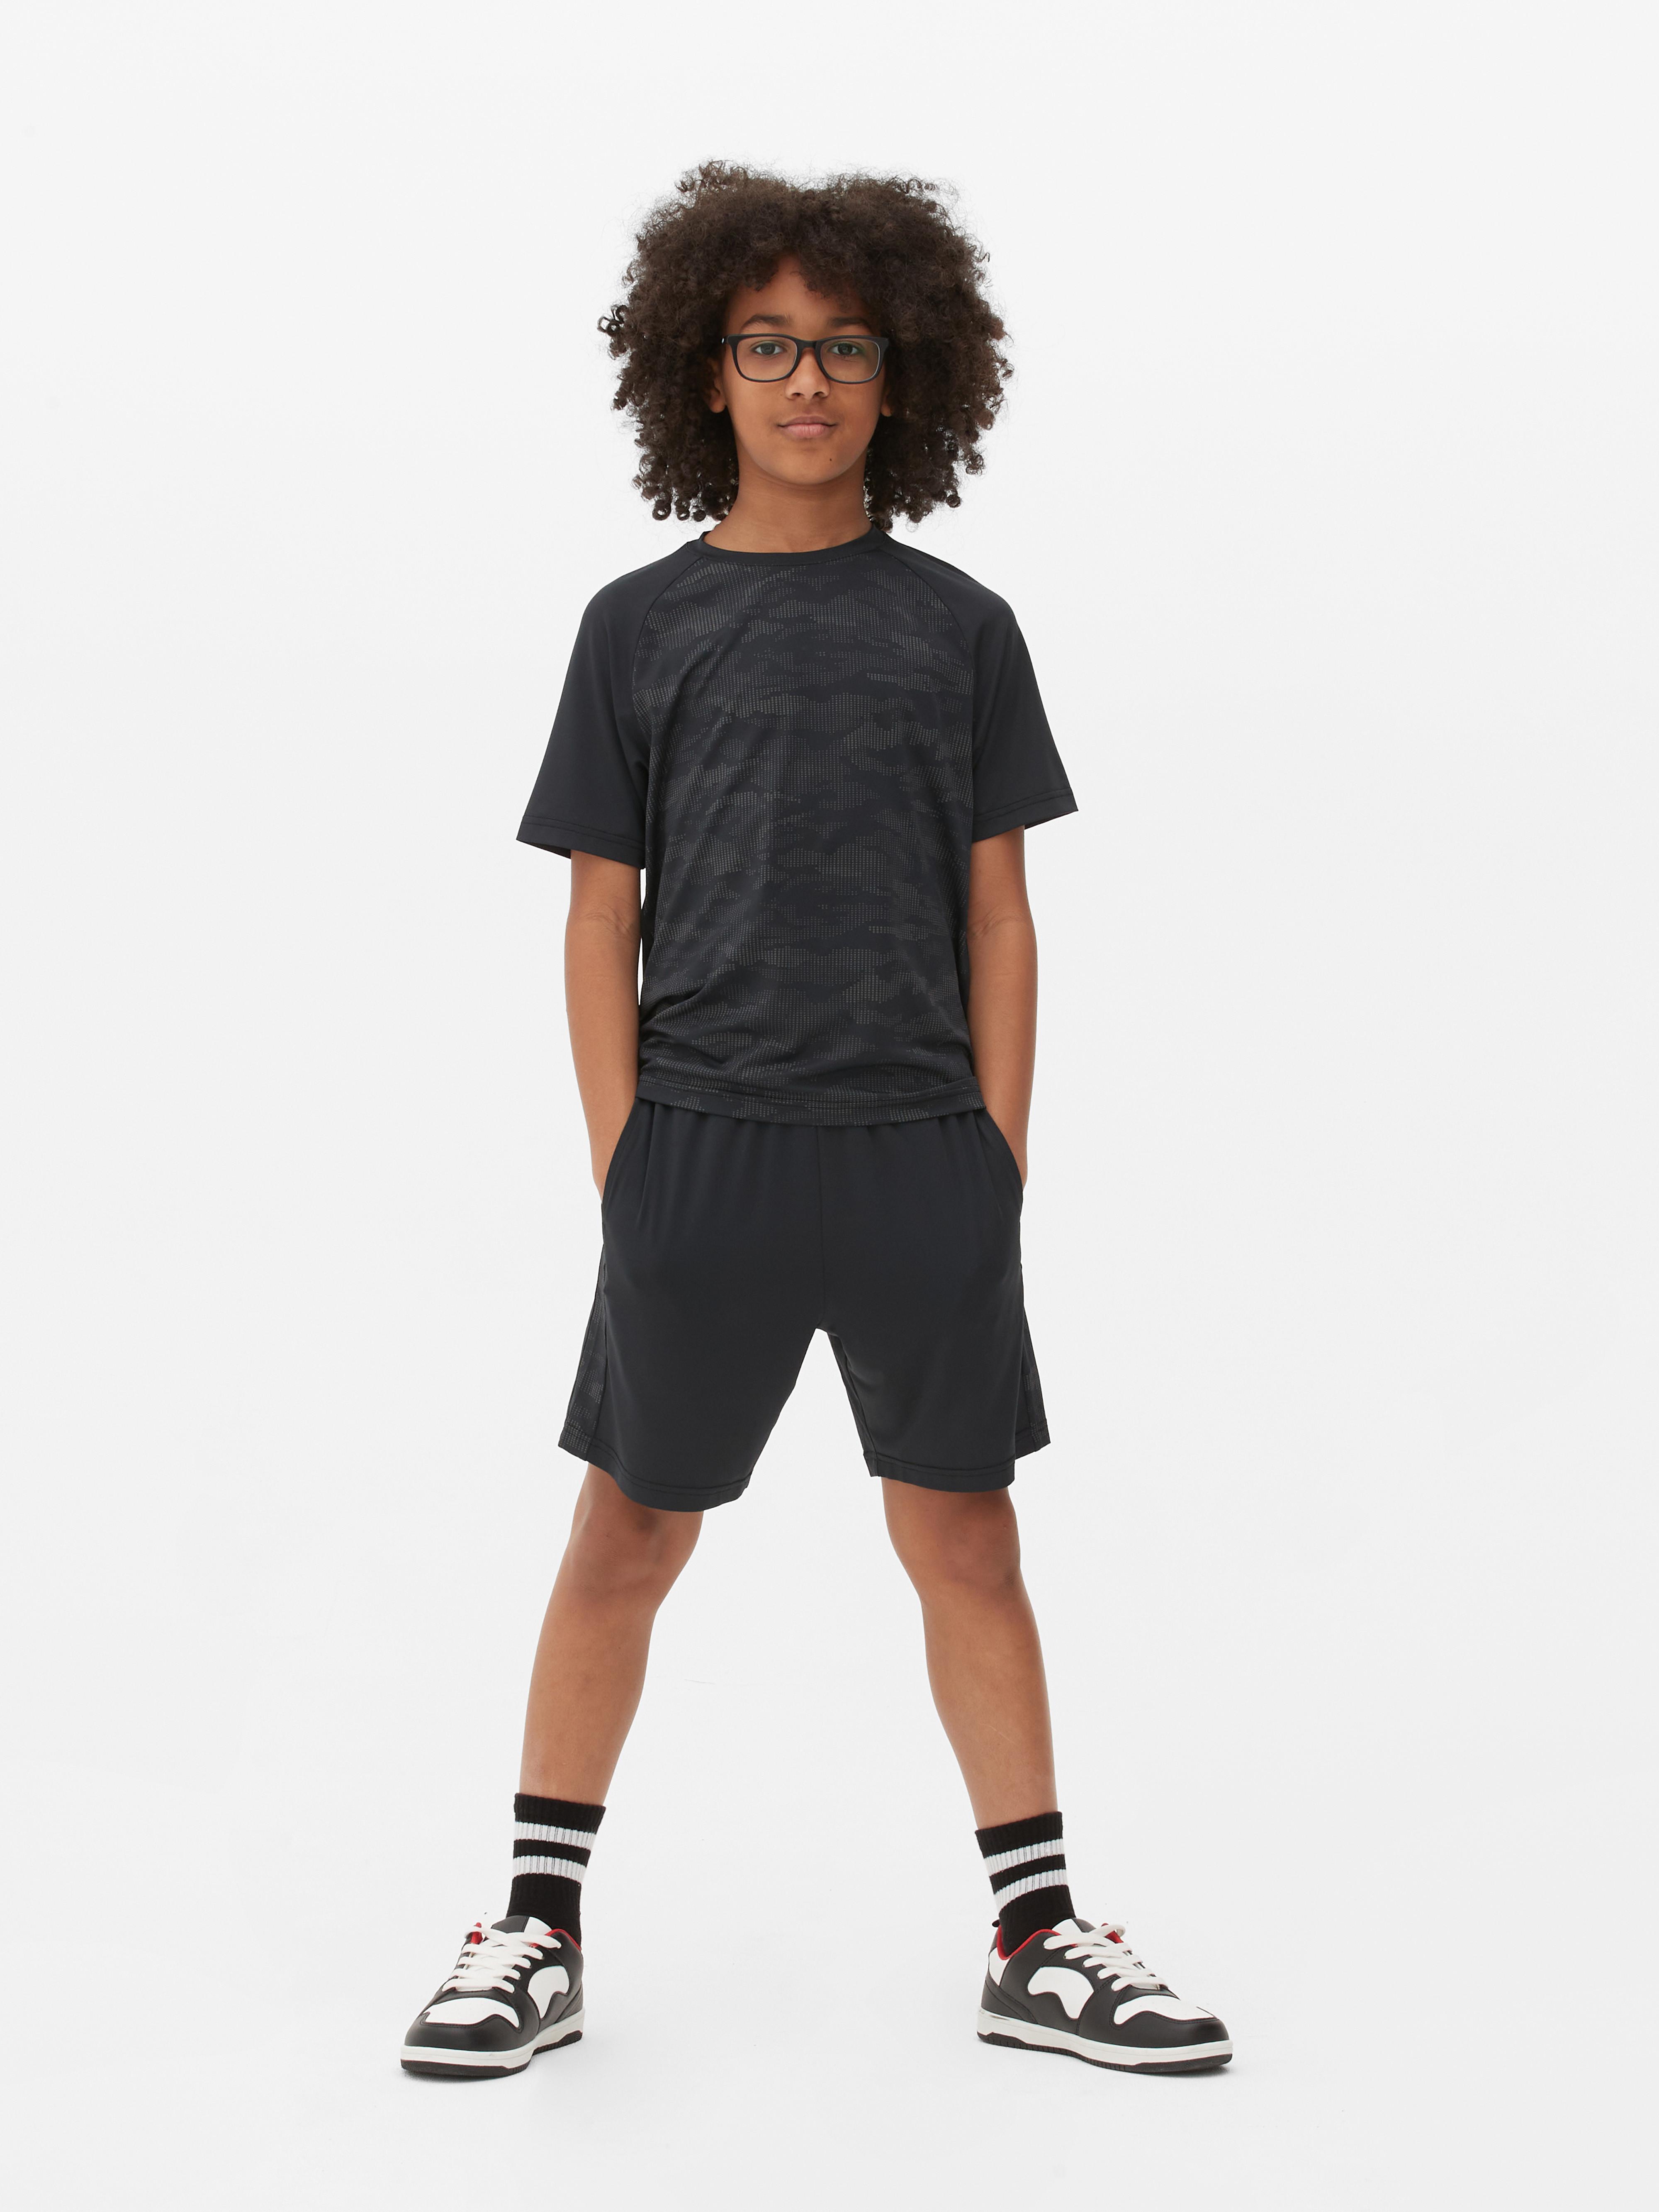 Camo Active T-Shirt and Shorts Set